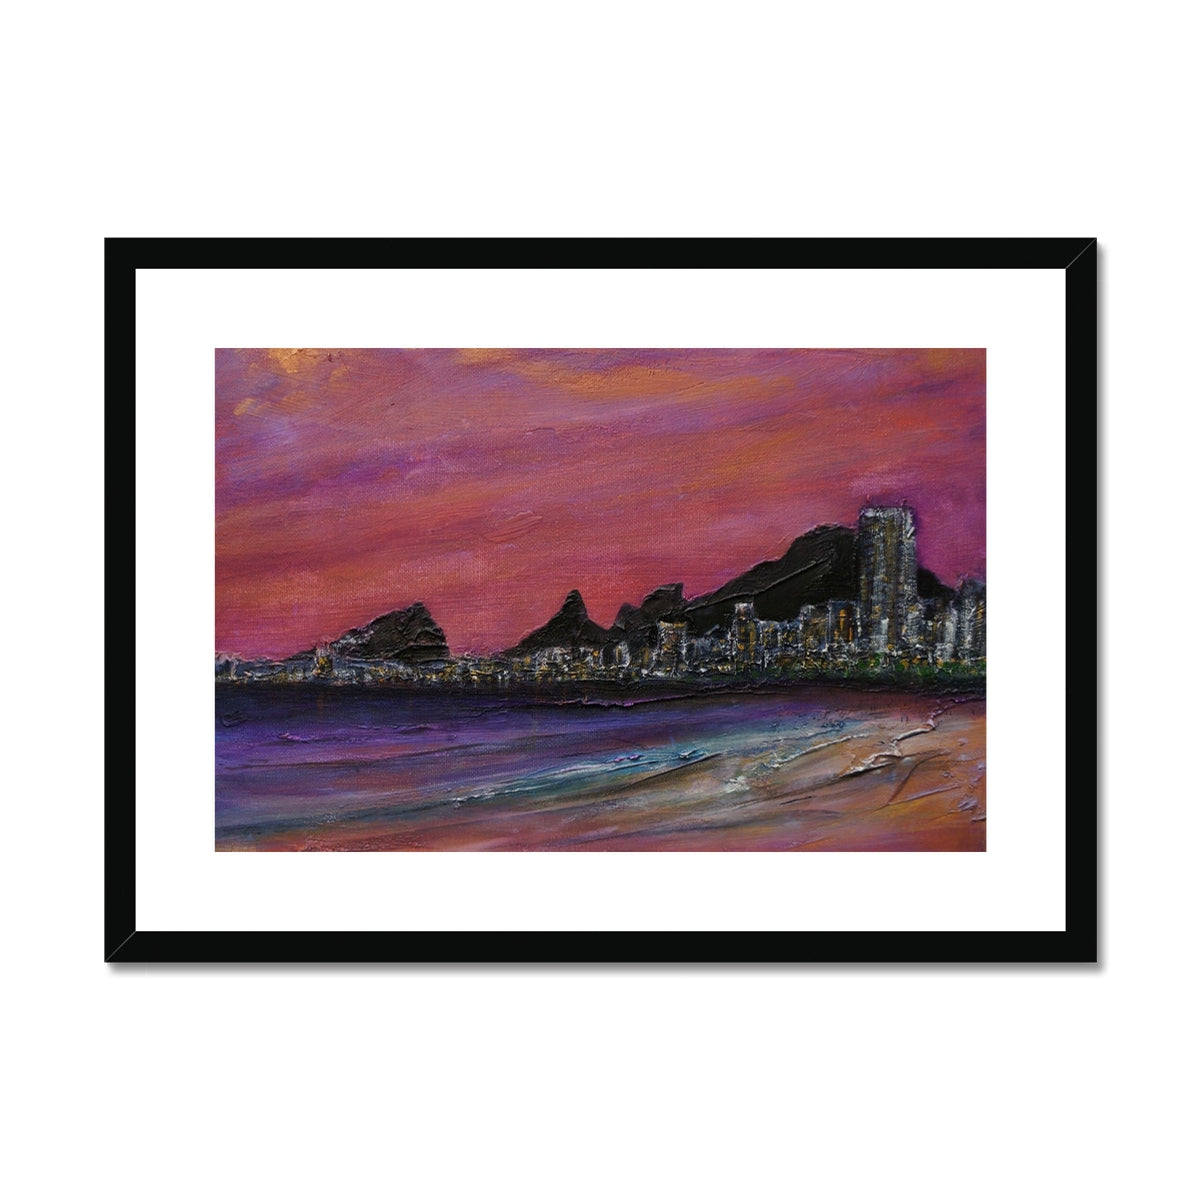 Copacabana Beach Dusk Painting | Framed & Mounted Prints From Scotland-Framed & Mounted Prints-World Art Gallery-A2 Landscape-Black Frame-Paintings, Prints, Homeware, Art Gifts From Scotland By Scottish Artist Kevin Hunter